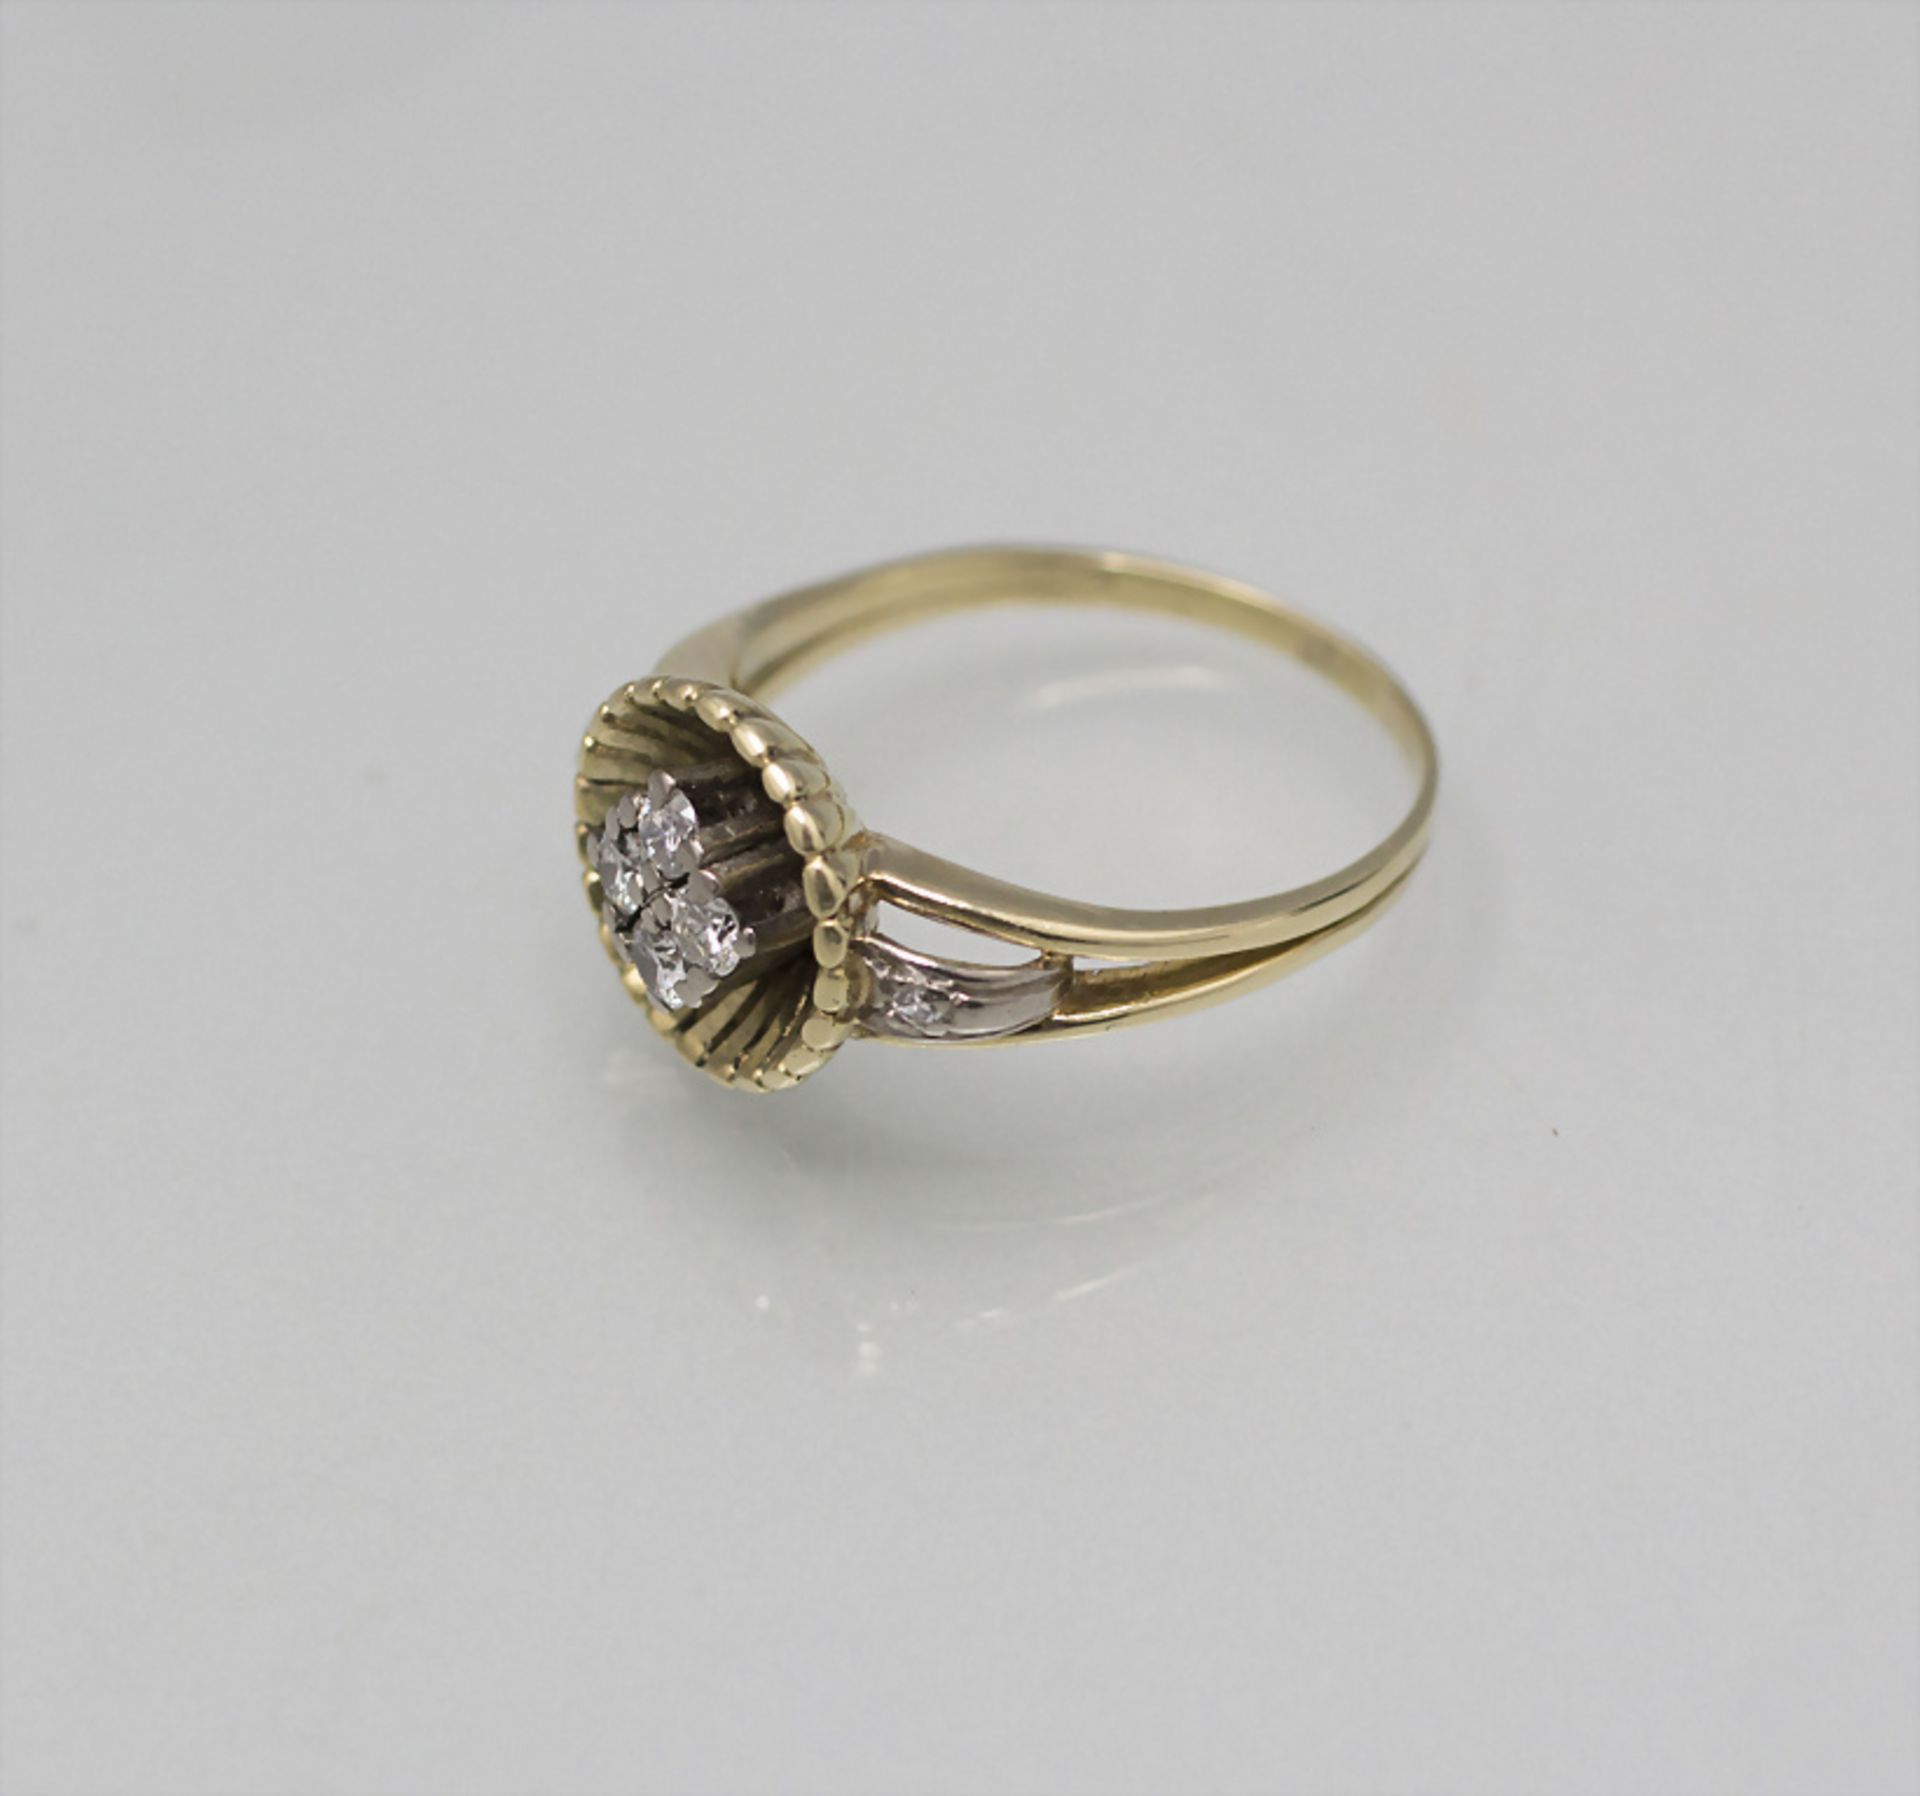 Damenring mit Diamanten / A ladies 14 ct gold ring with diamonds - Image 2 of 3